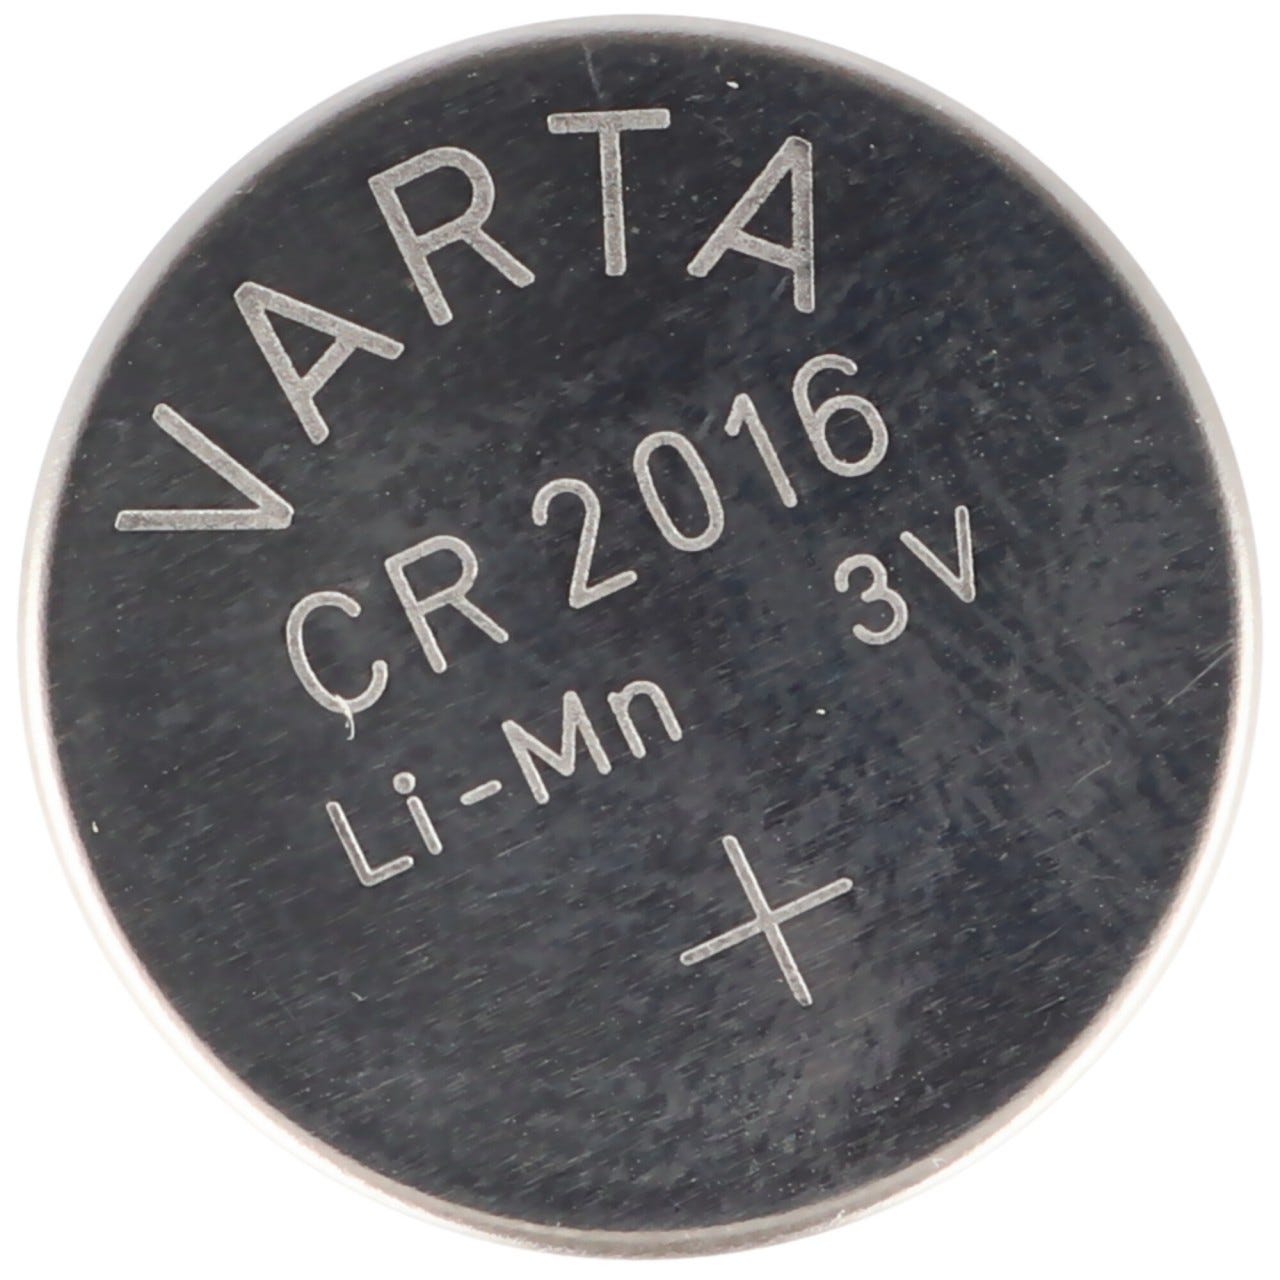 Pile VARTA CR2016 Lithium 3v